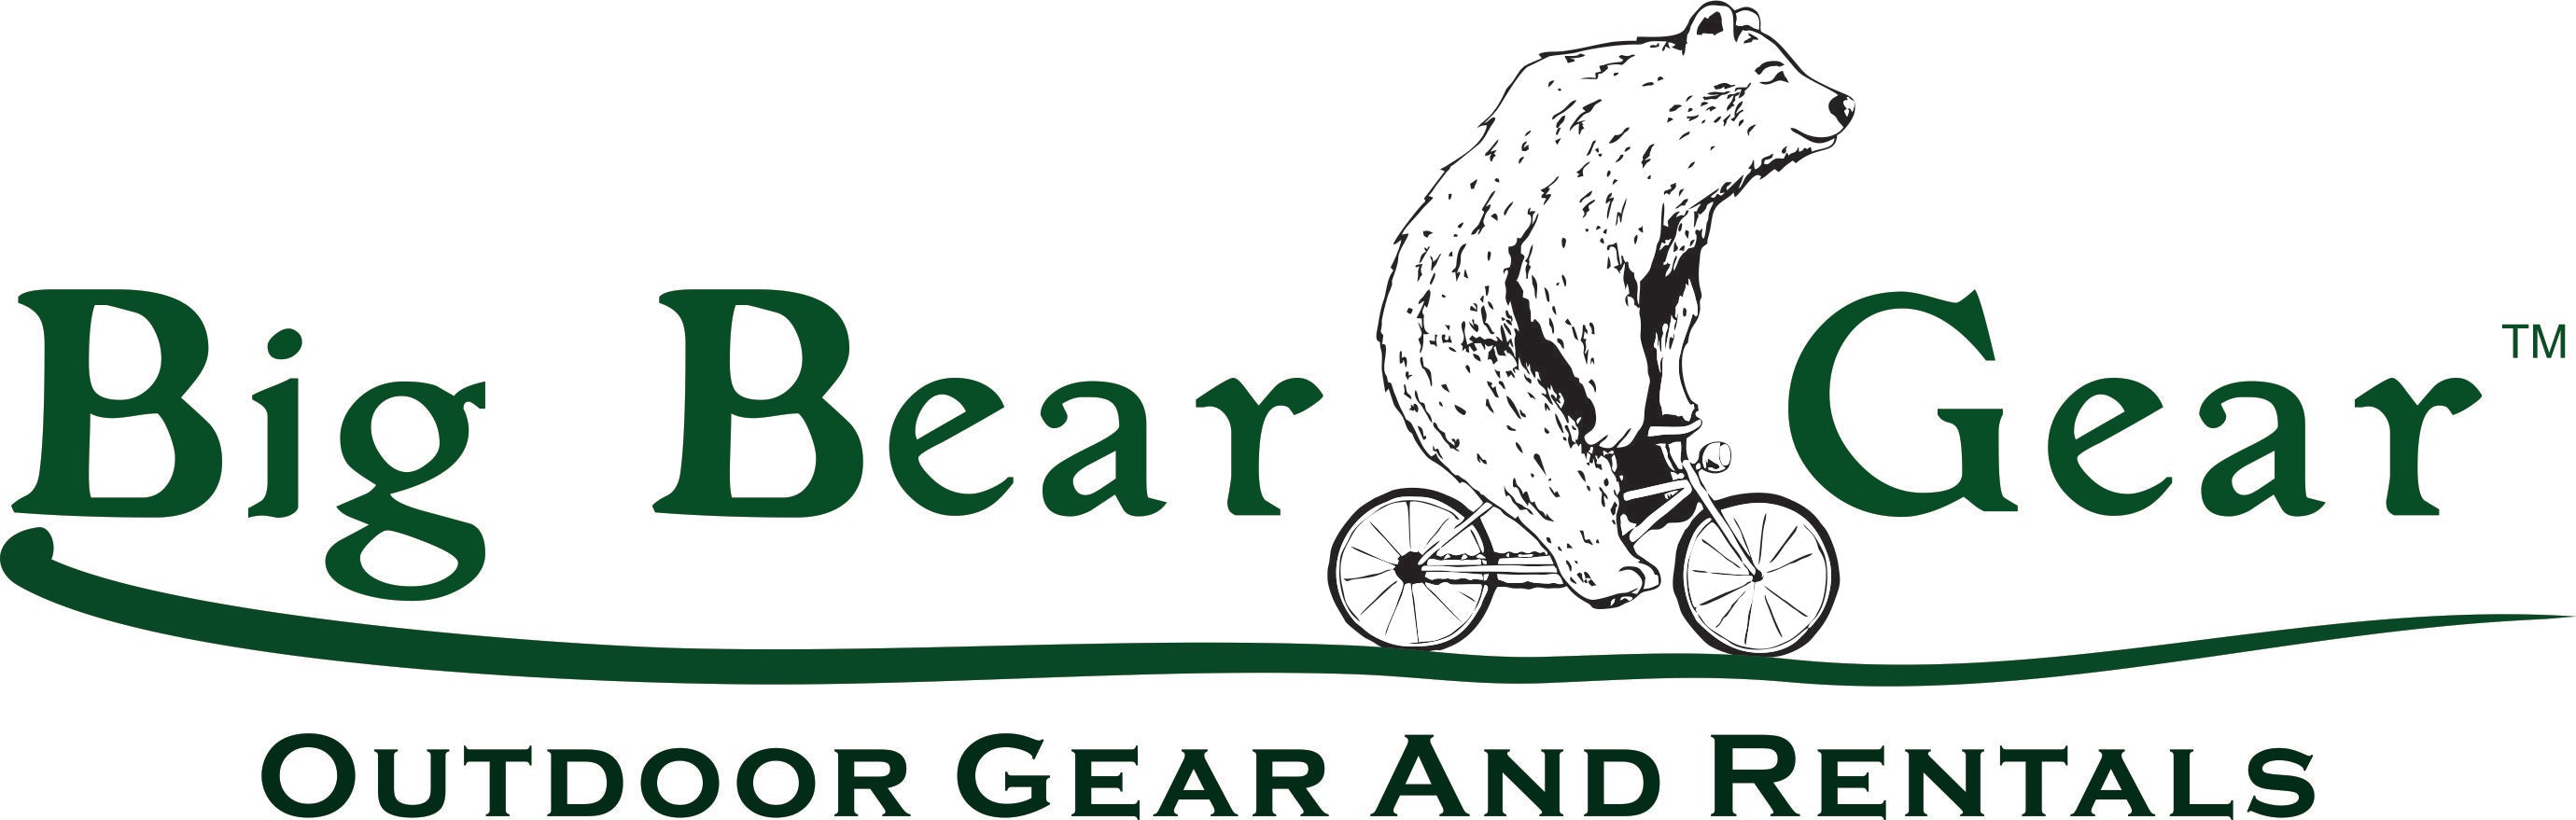 Big Bear Gear - Outdoor Gear, Apparel and Rentals – BigBearGearNJ